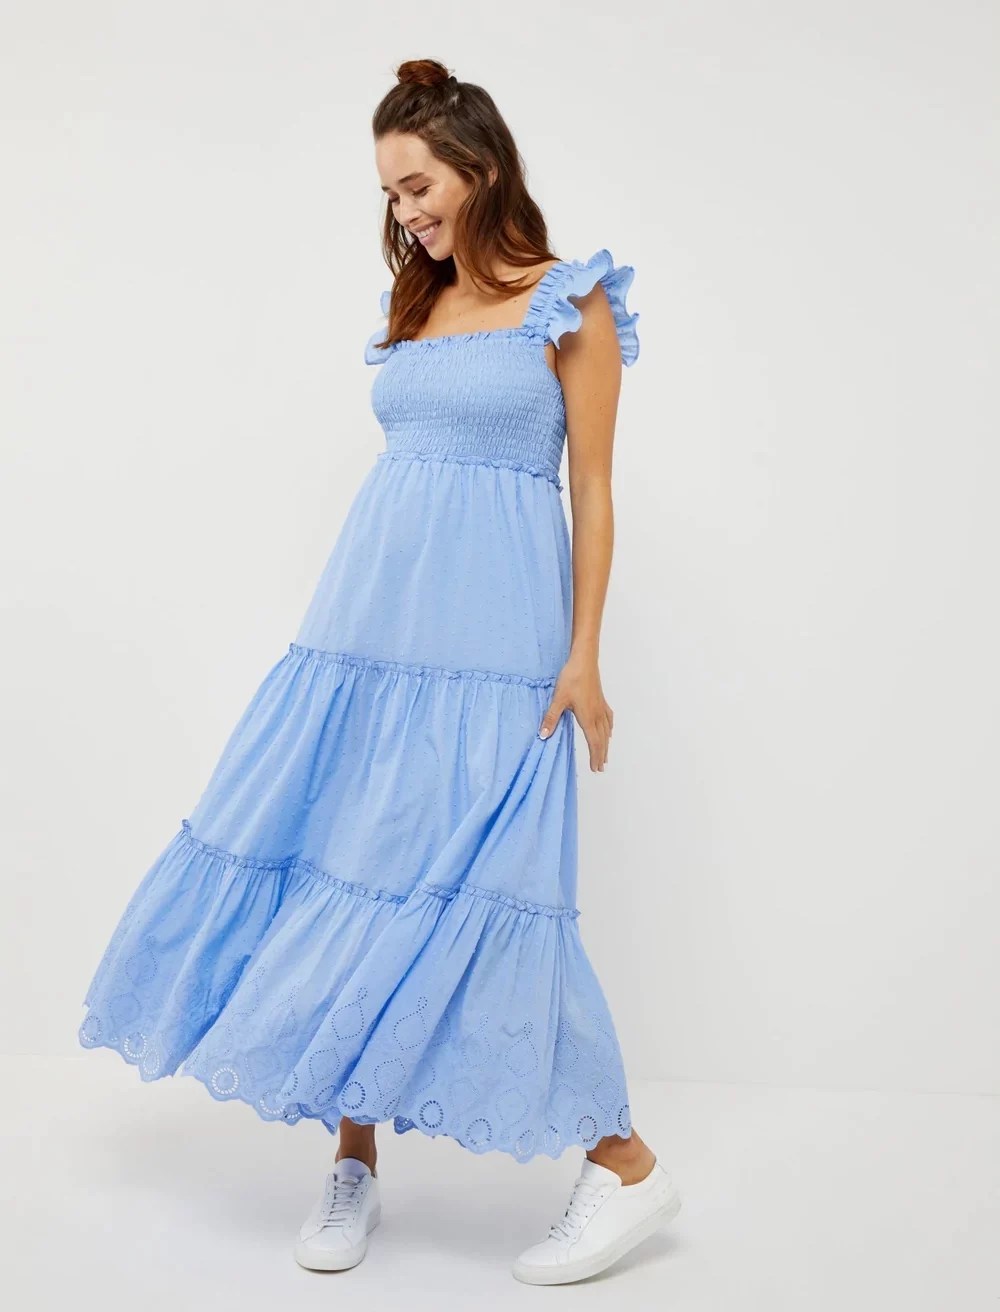 The Best Maternity Dresses for Spring & Summer